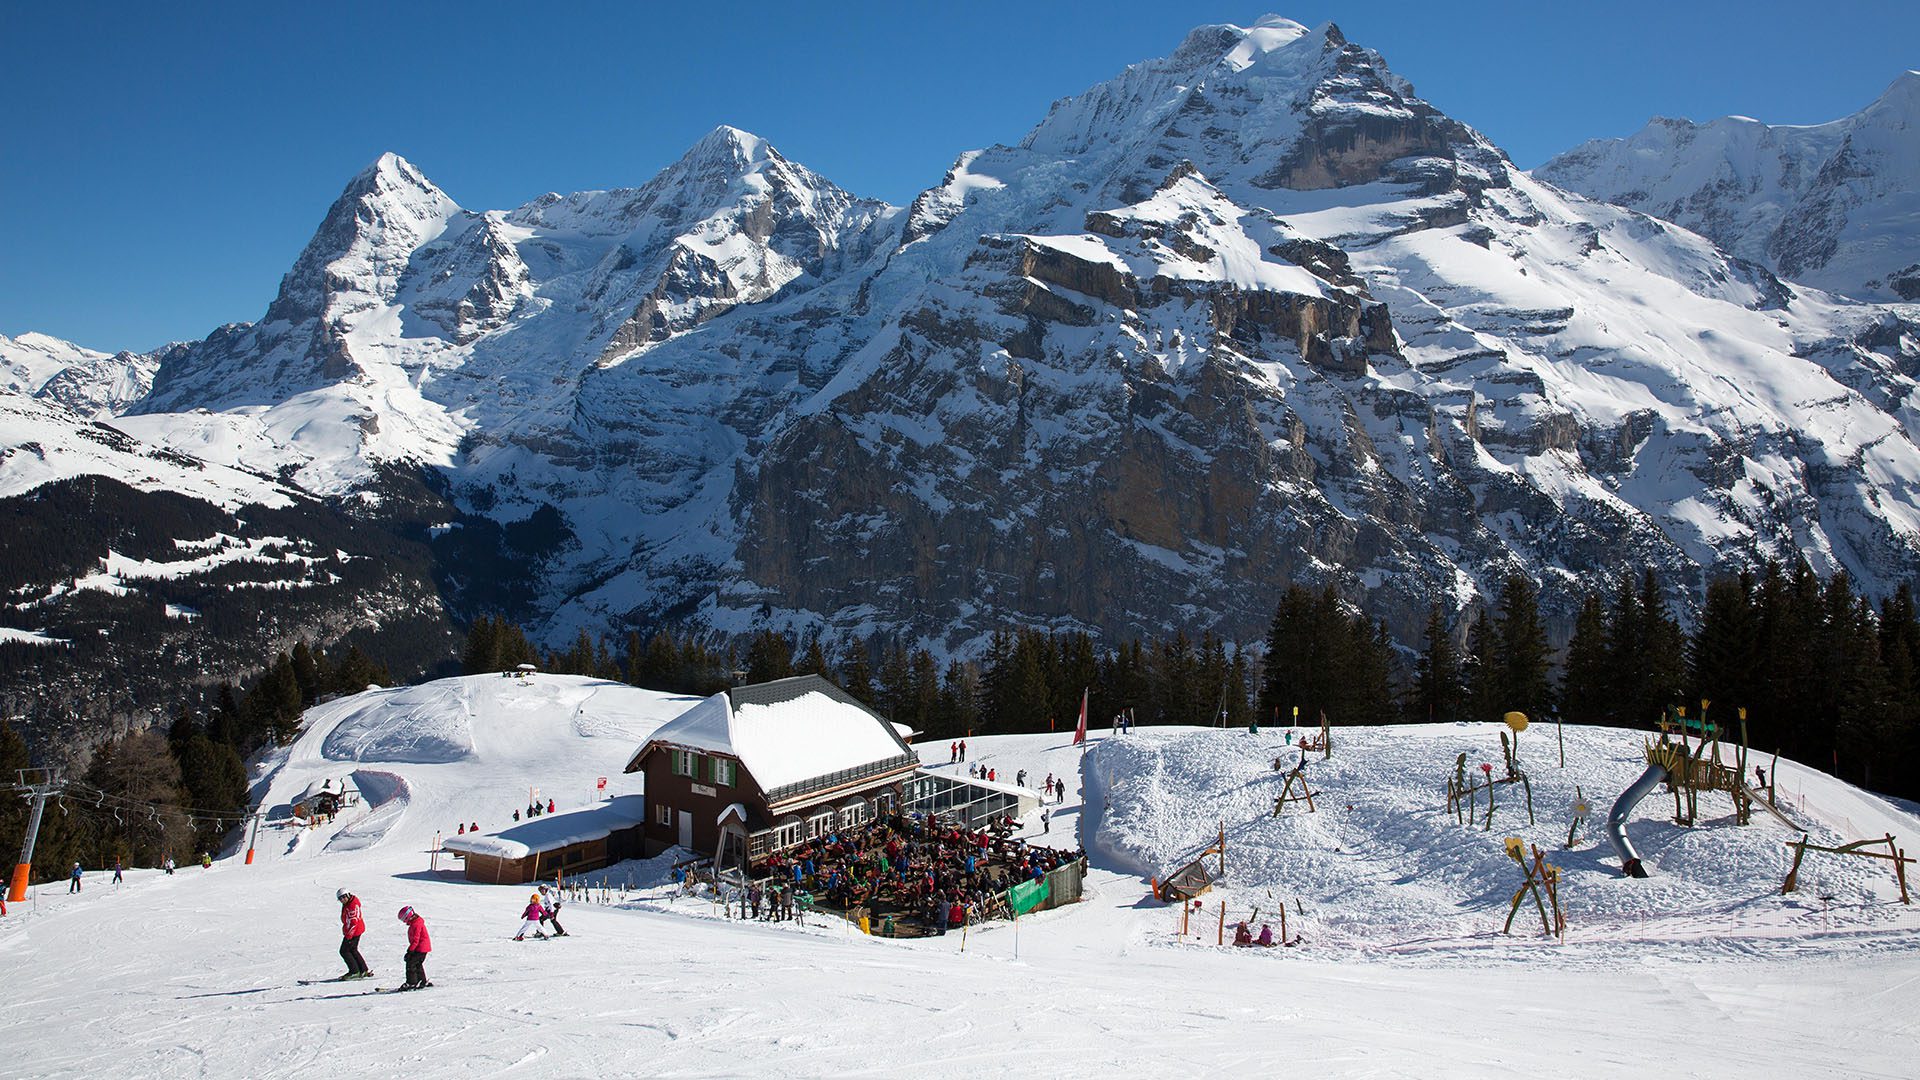 Winter sports in Switzerland– experience Alpine skiing in Mürren